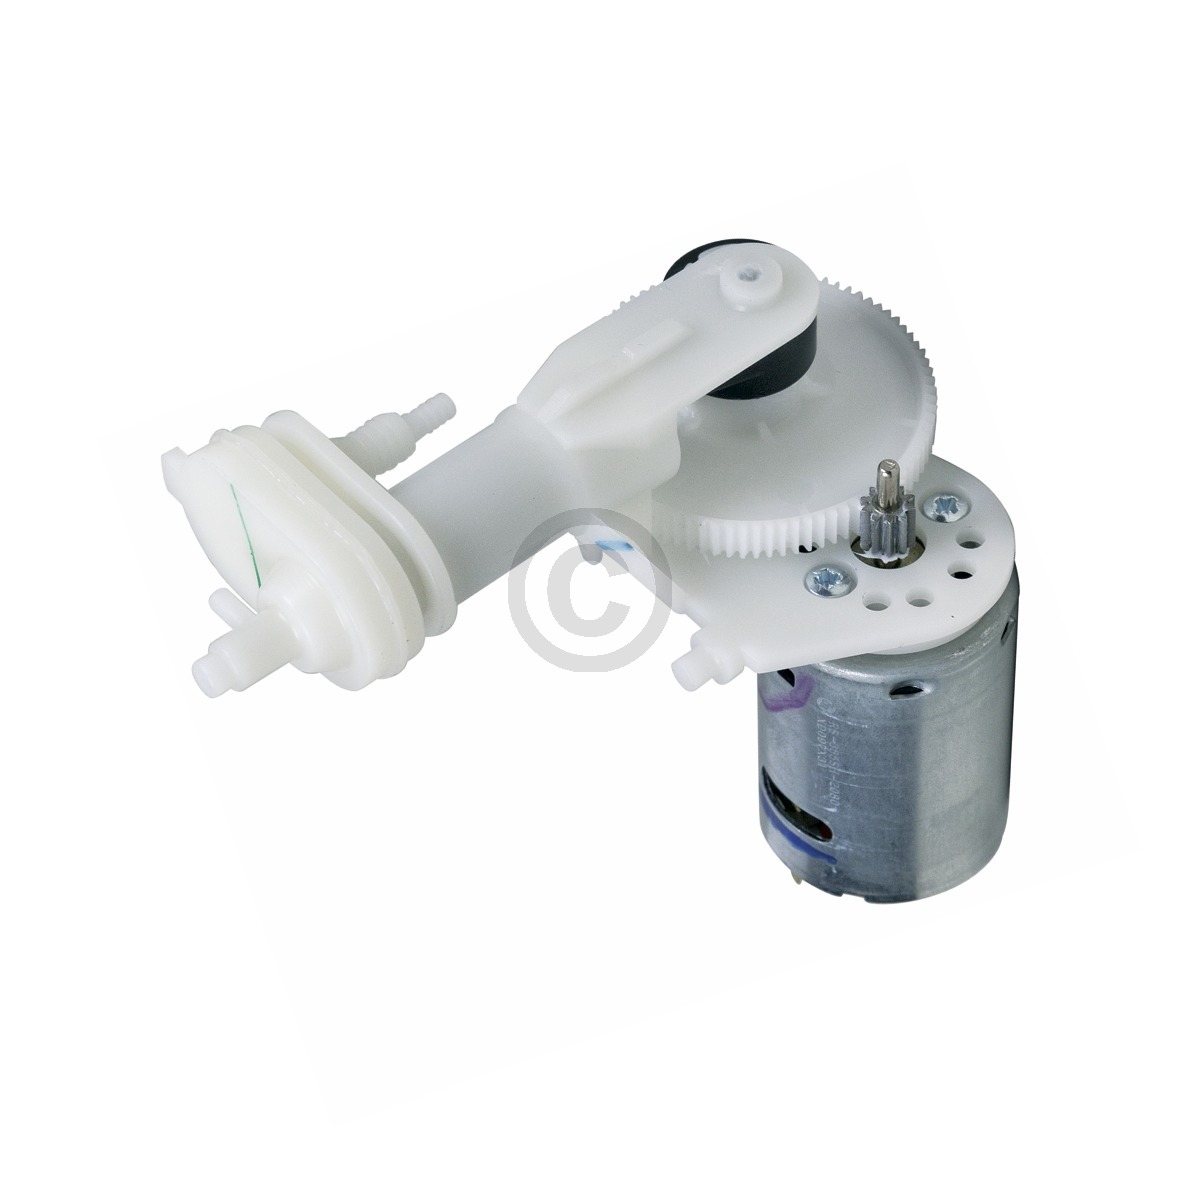 Pumpe BRAUN 81626034 für Munddusche Professional Care Oxyjet